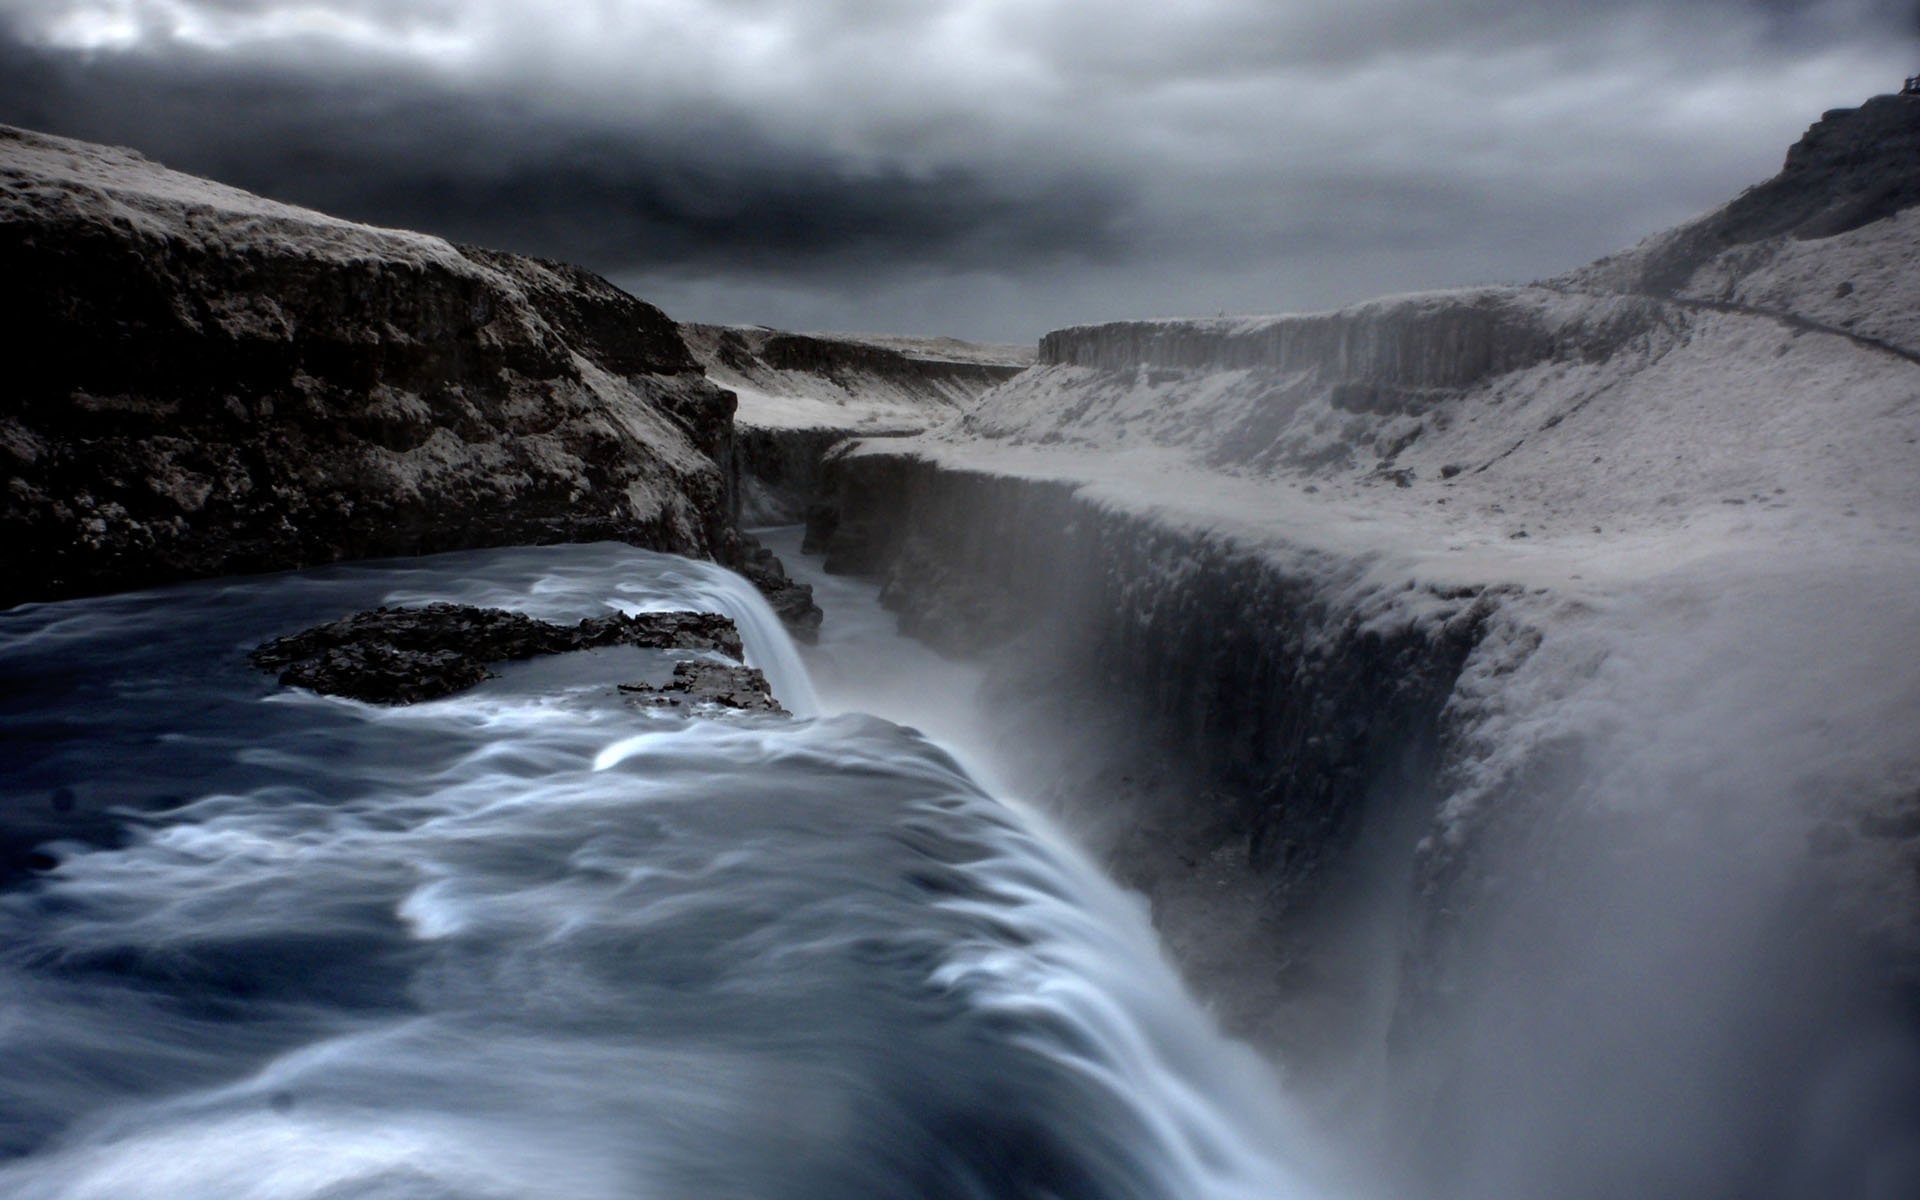 Gullfoss Waterfall, Iceland wallpaper, Free download, Desktop mobile tablet, 1920x1200 HD Desktop